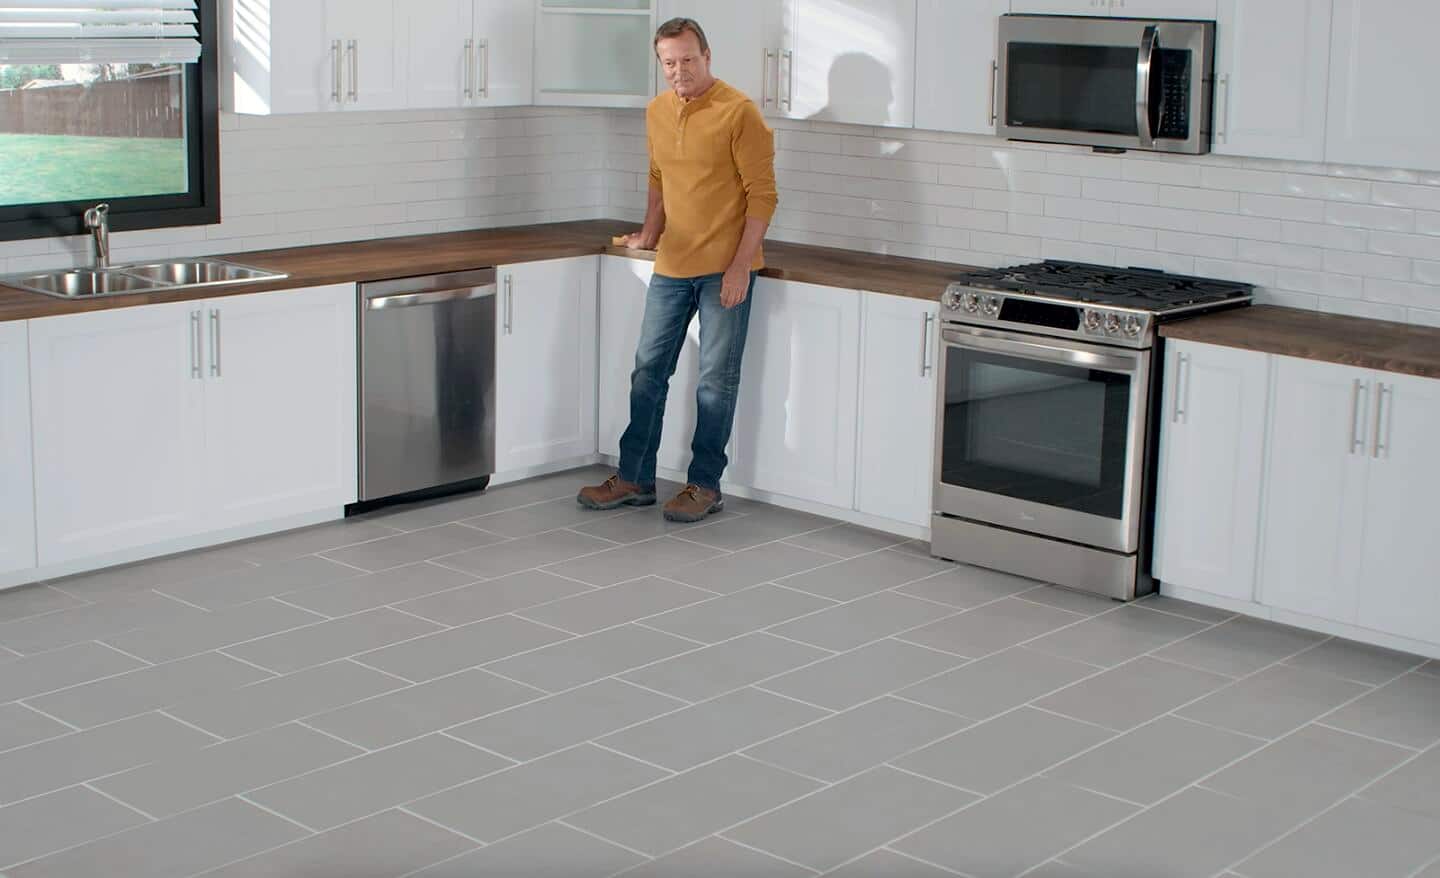 A kitchen featuring an offset tile pattern.